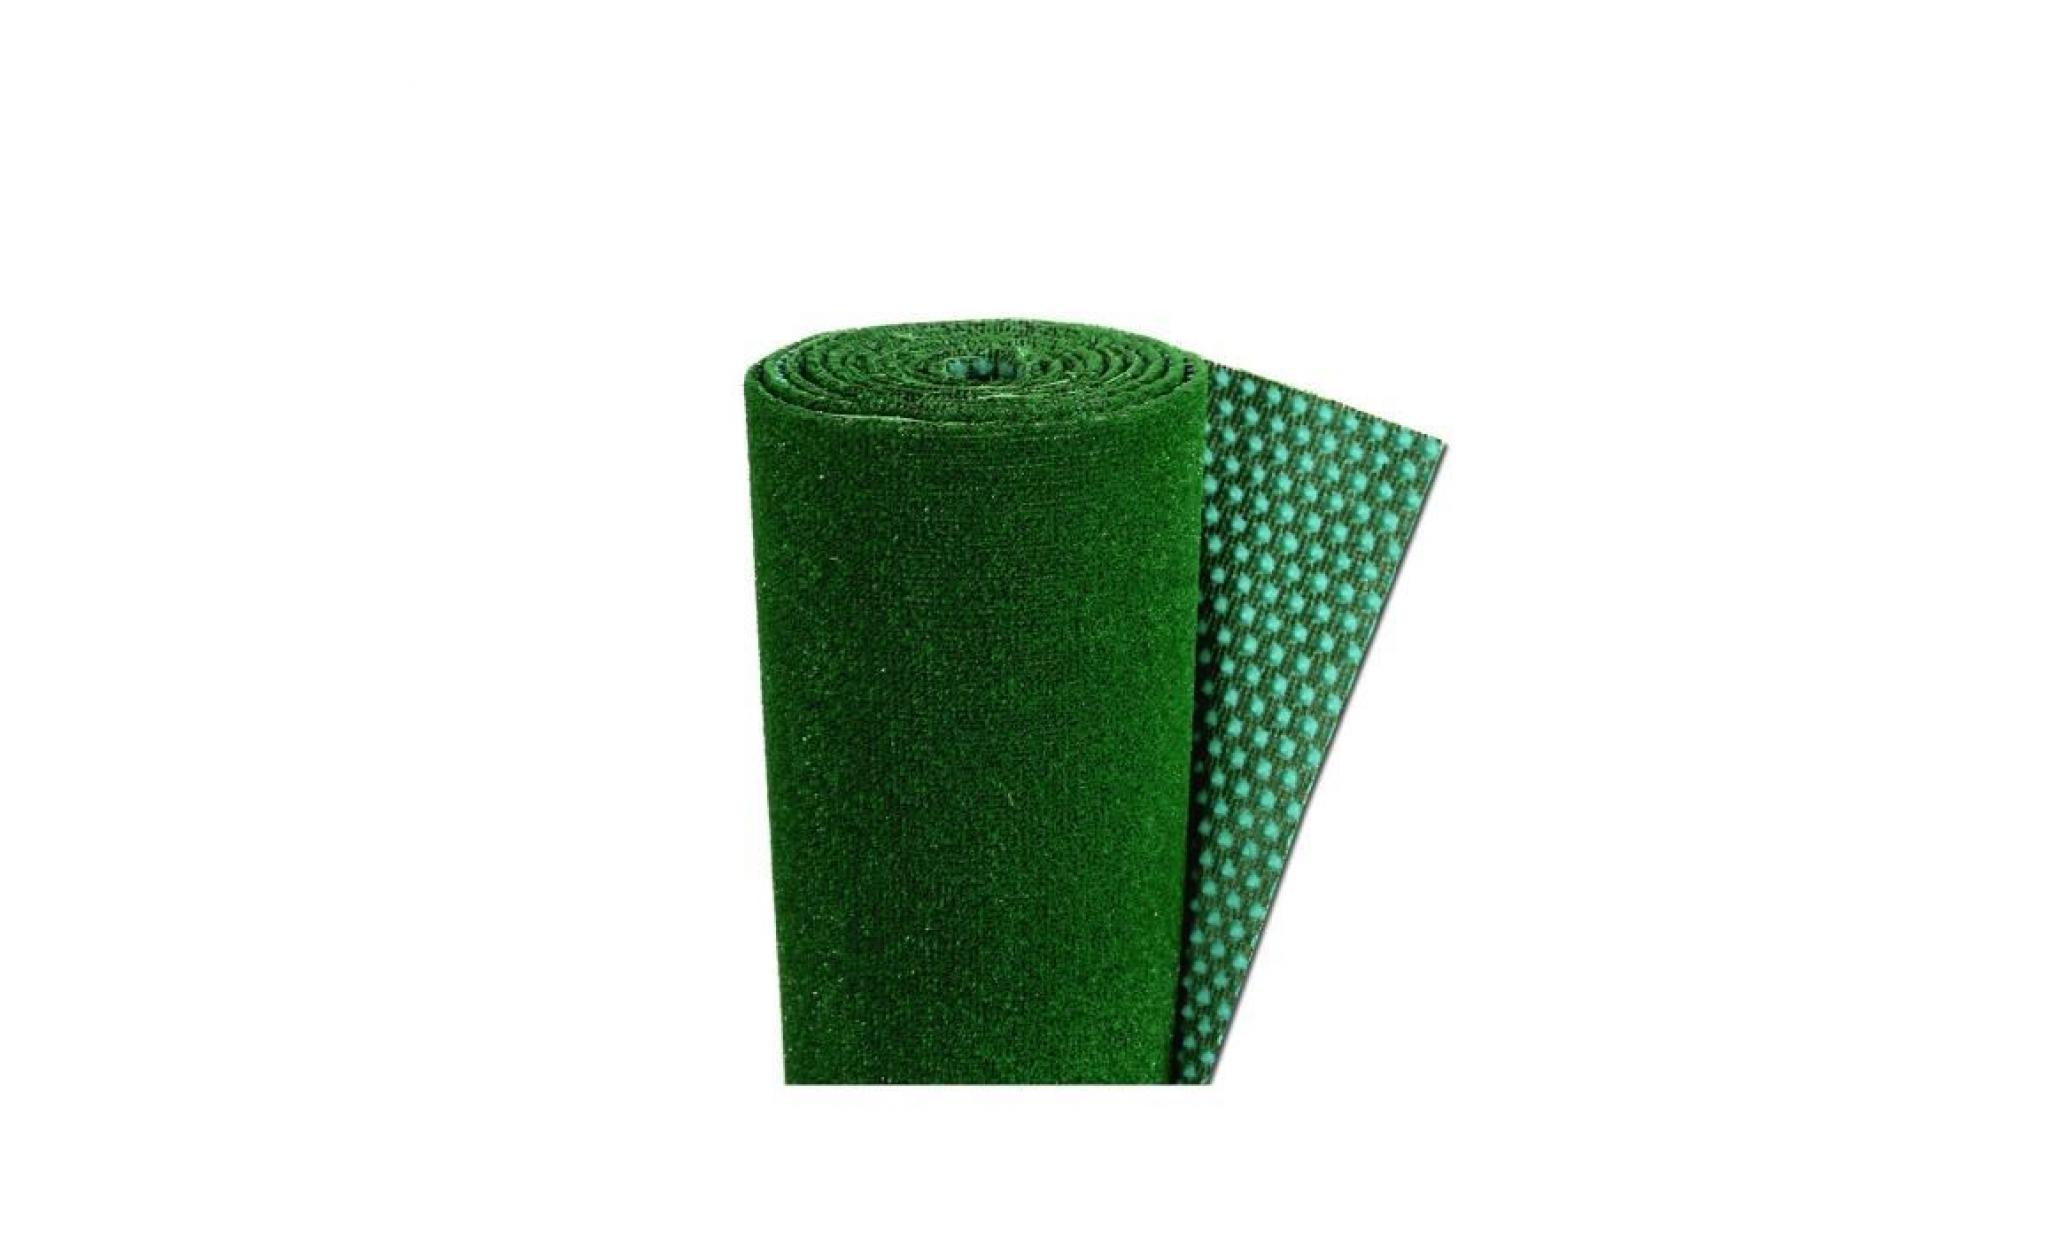 york   tapis type gazon artificiel avec nubs – pour jardin, terrasse, balcon   vert   [200x400 cm] pas cher